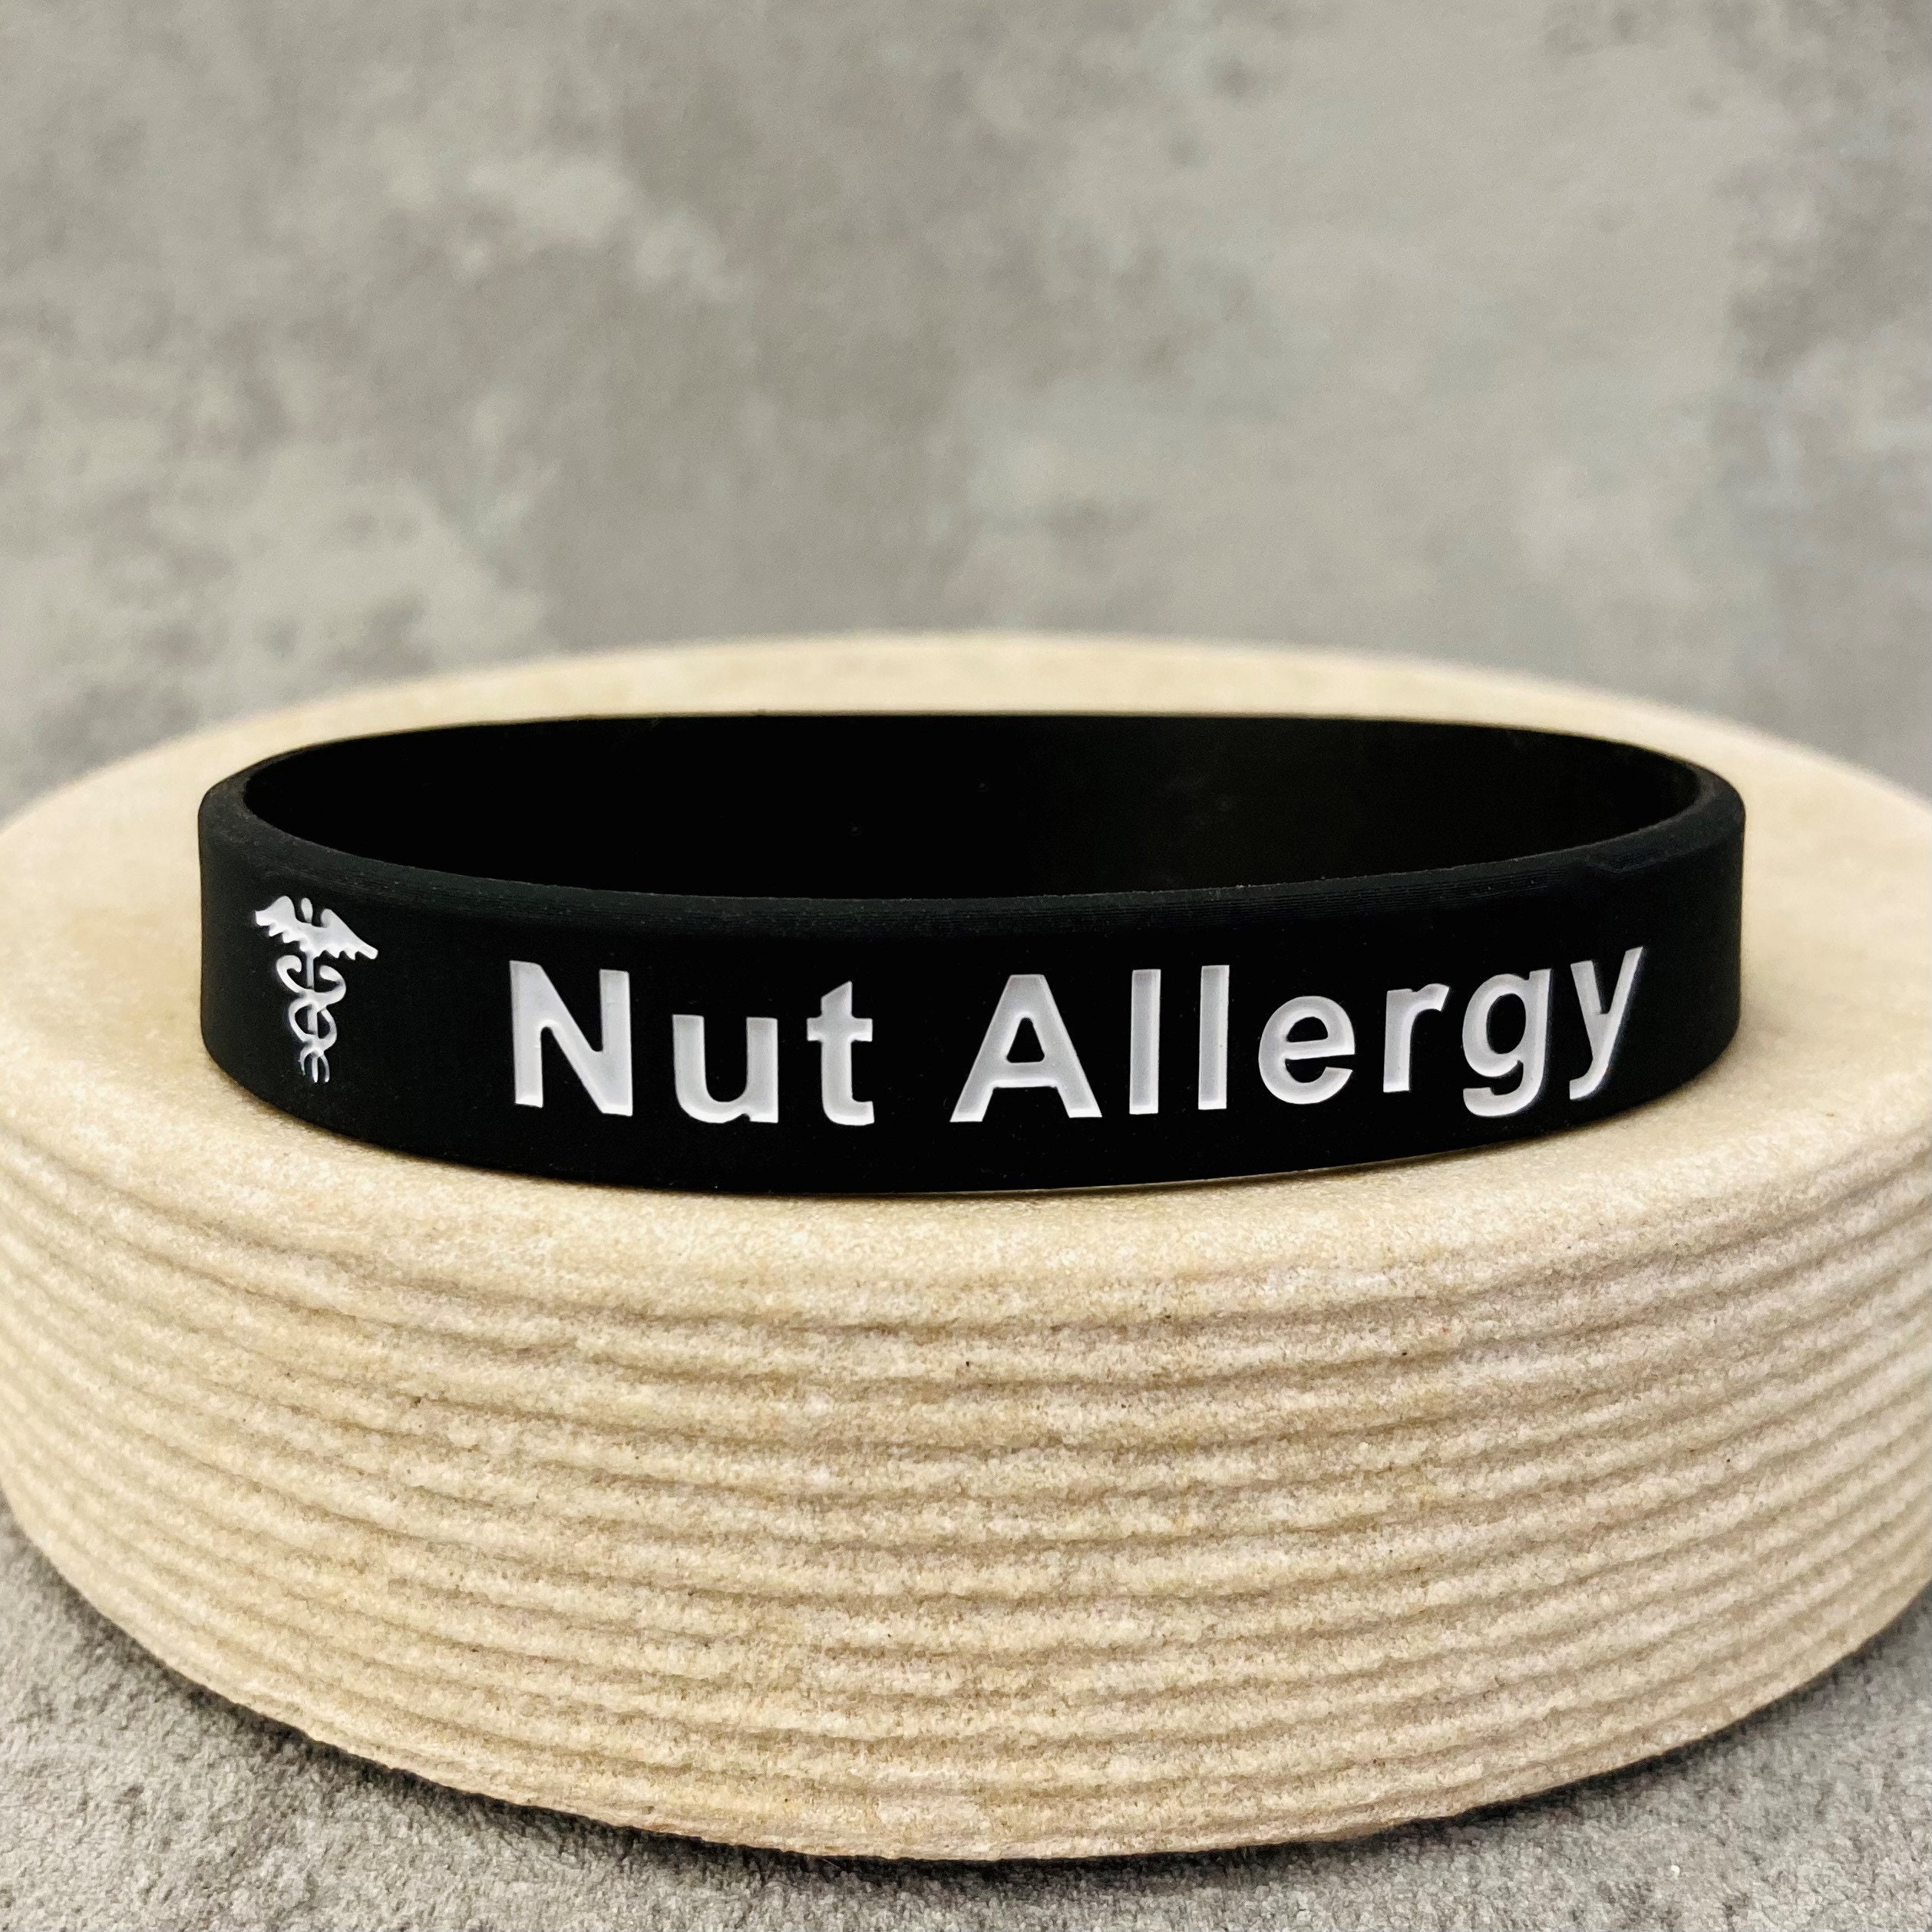 Nestle places peanut allergy treatment business under strategic review |  Baking Business